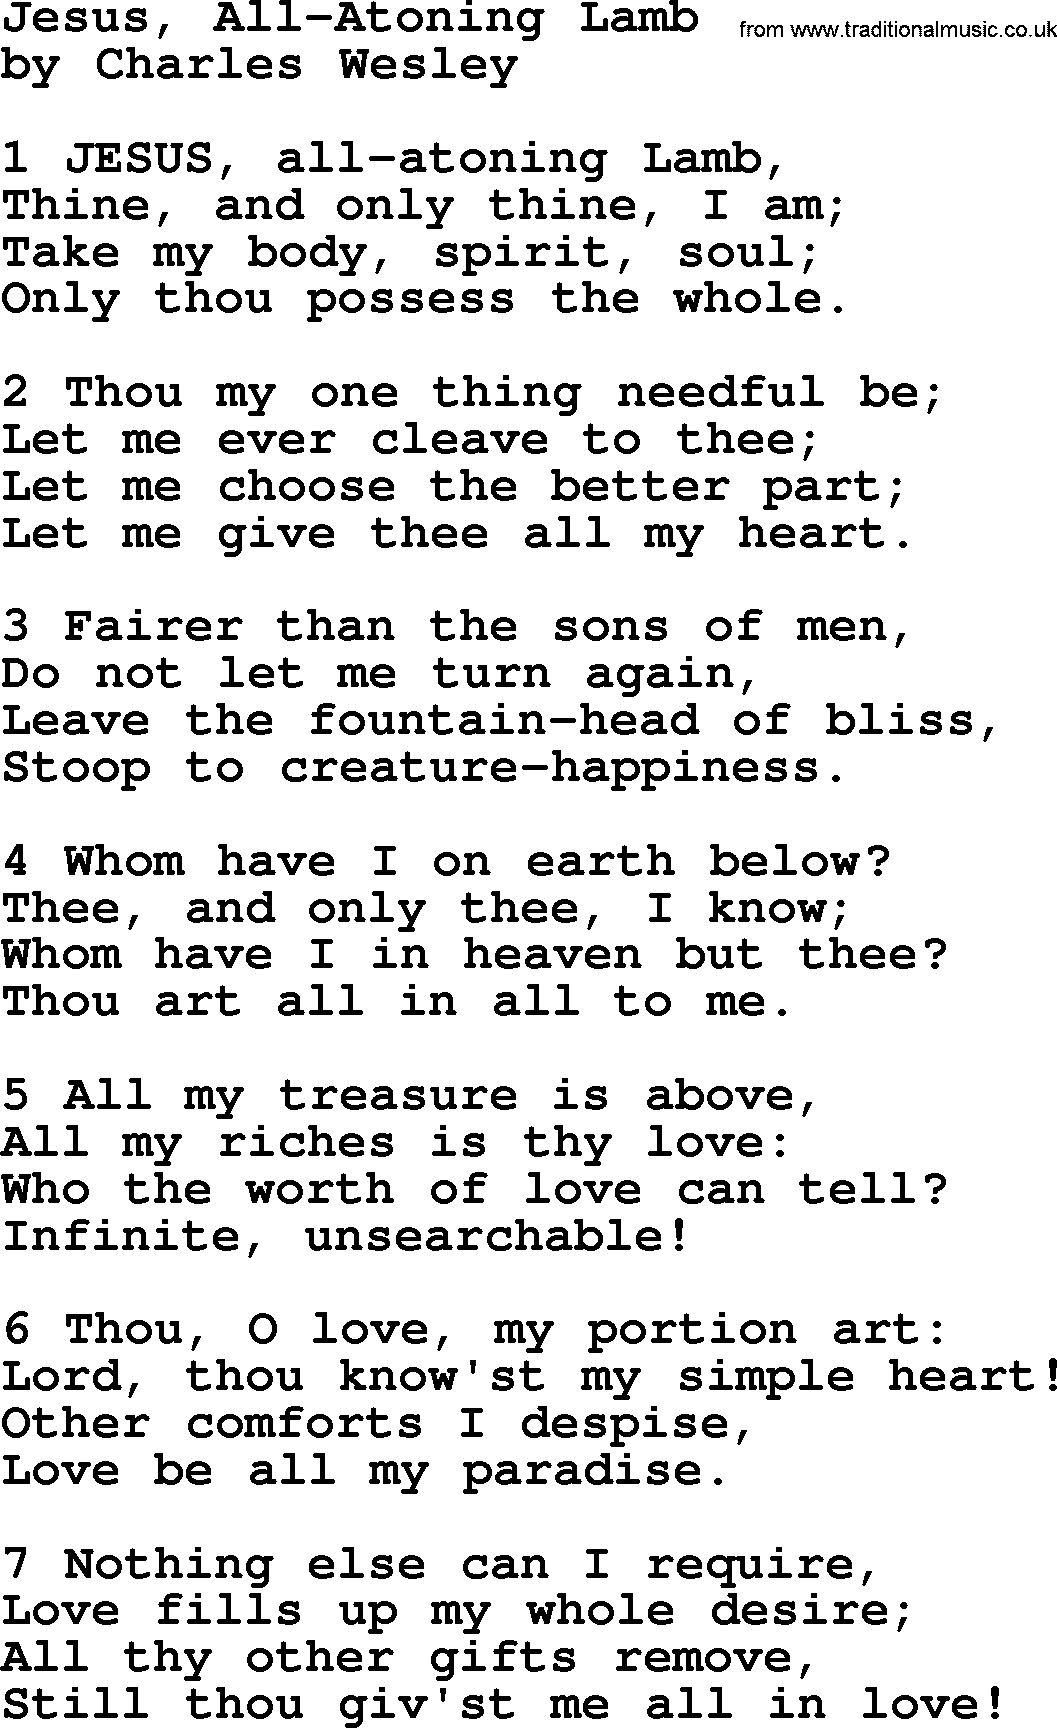 Charles Wesley hymn: Jesus, All-Atoning Lamb, lyrics